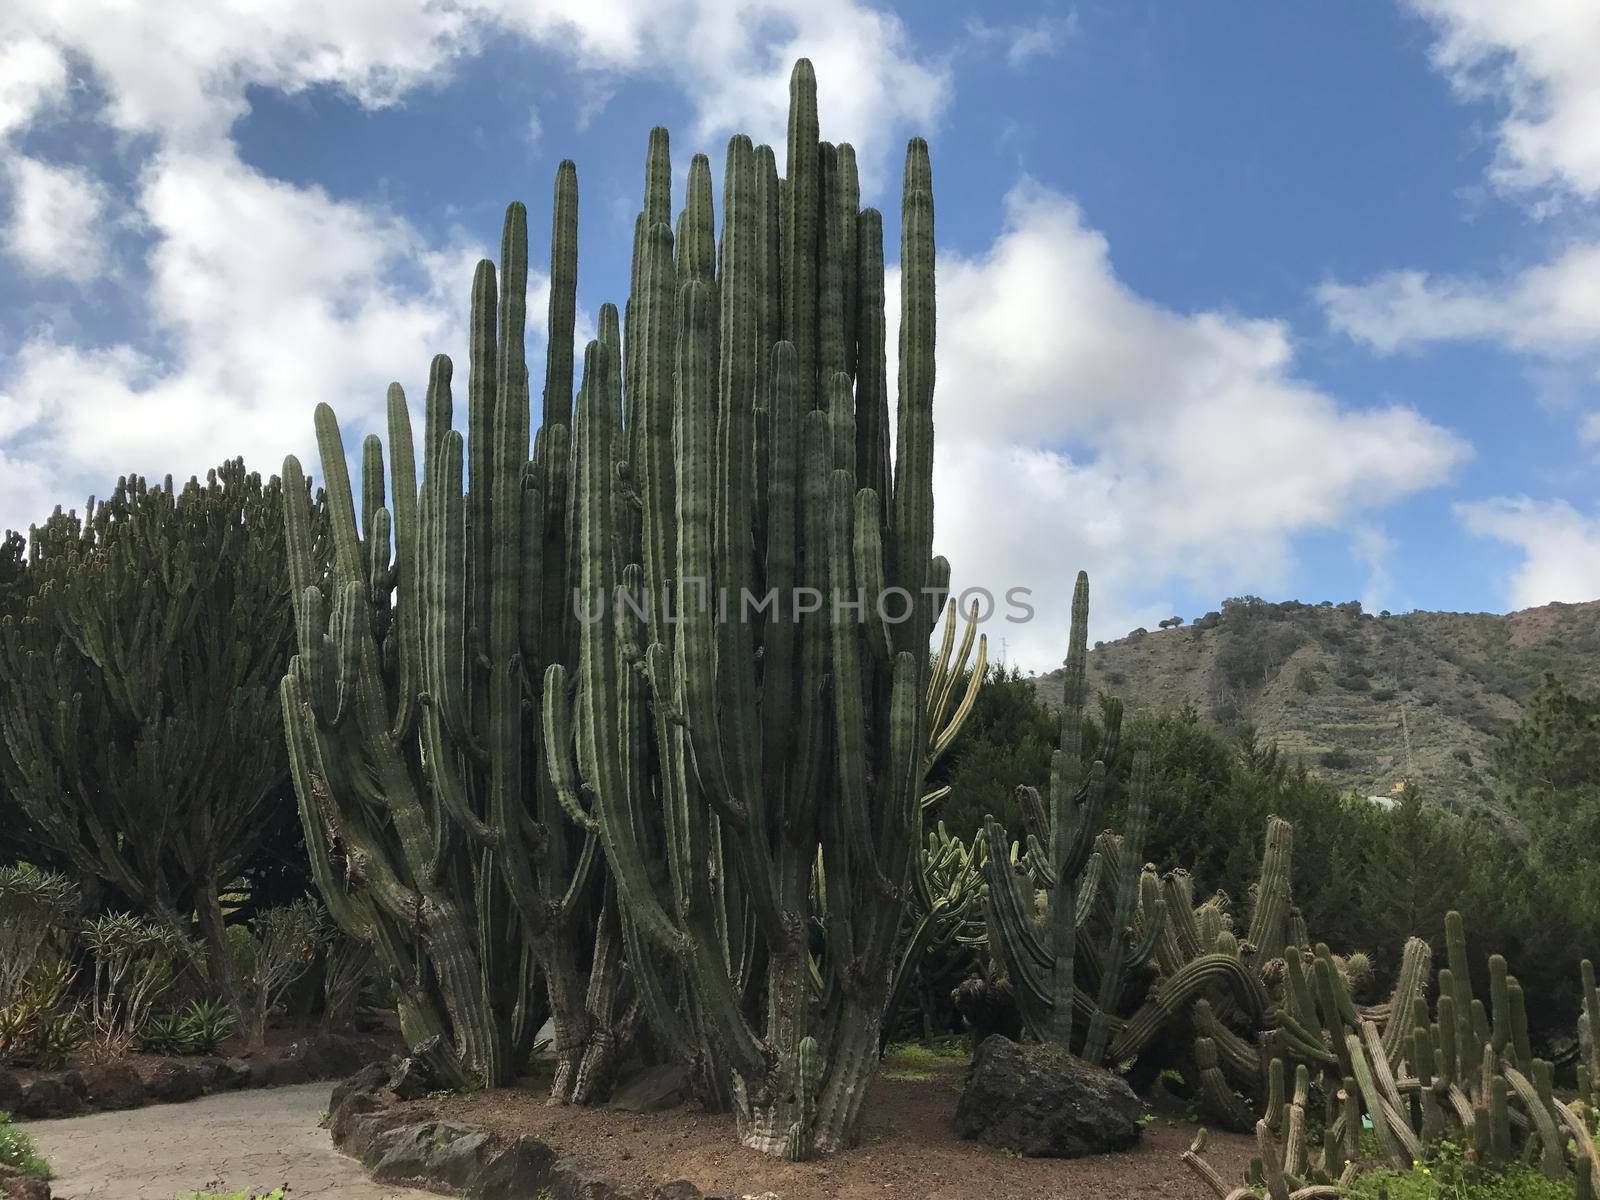 Big cactus at Jardin Canario botanic gardens by traveltelly